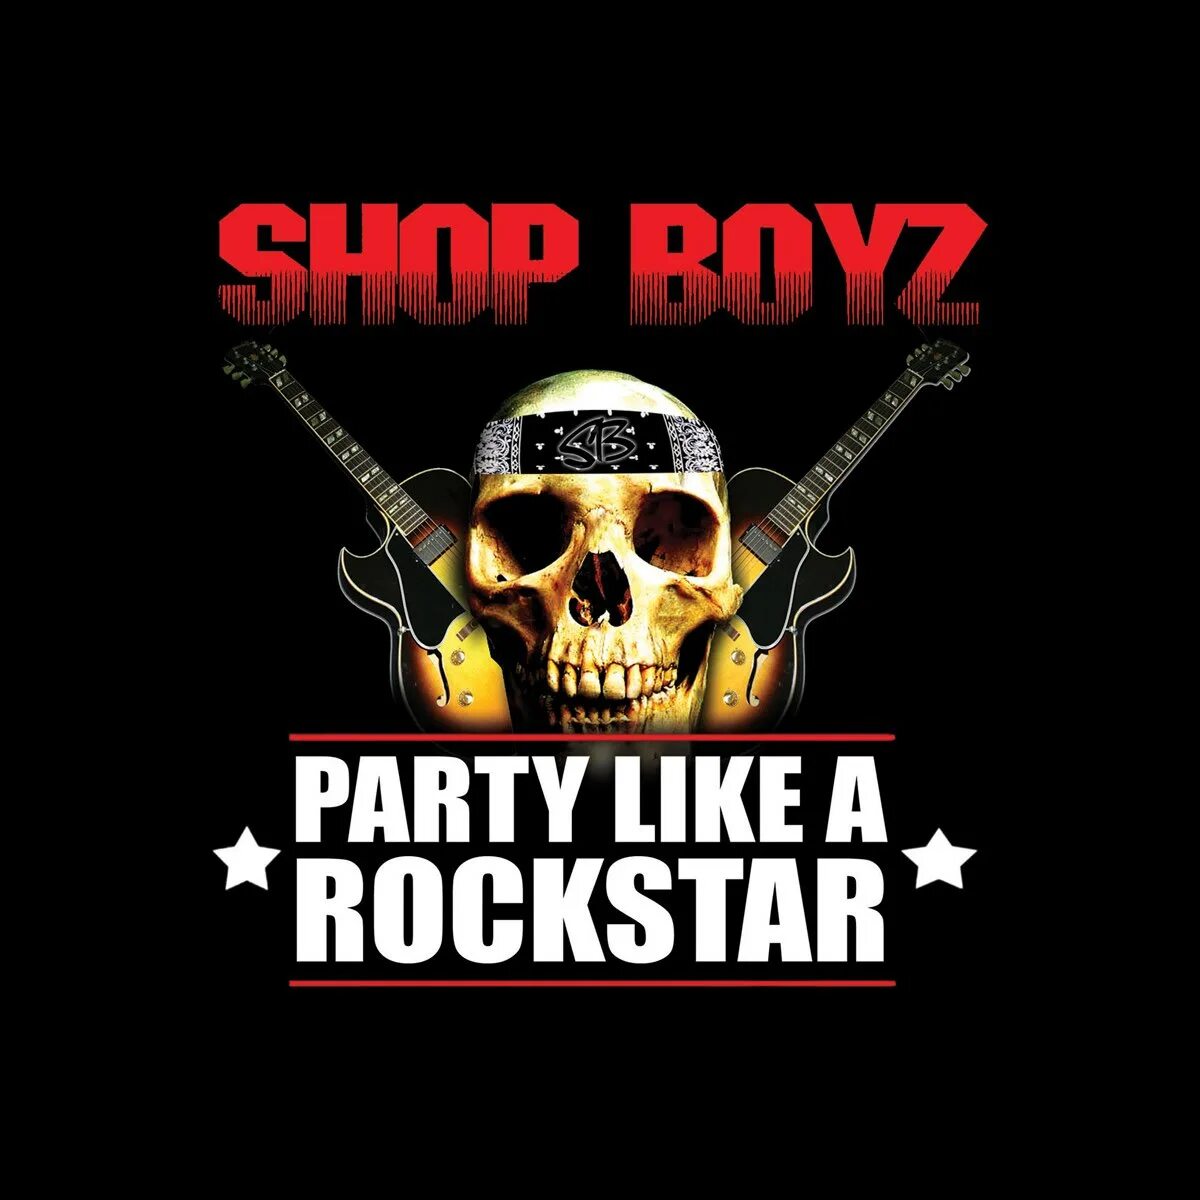 Рок стар песня слушать. Shop Boyz Party like a Rockstar. Party like a Rockstar. Shop boys - Rockstar Mentality. Вайт панк рокстар обложка.